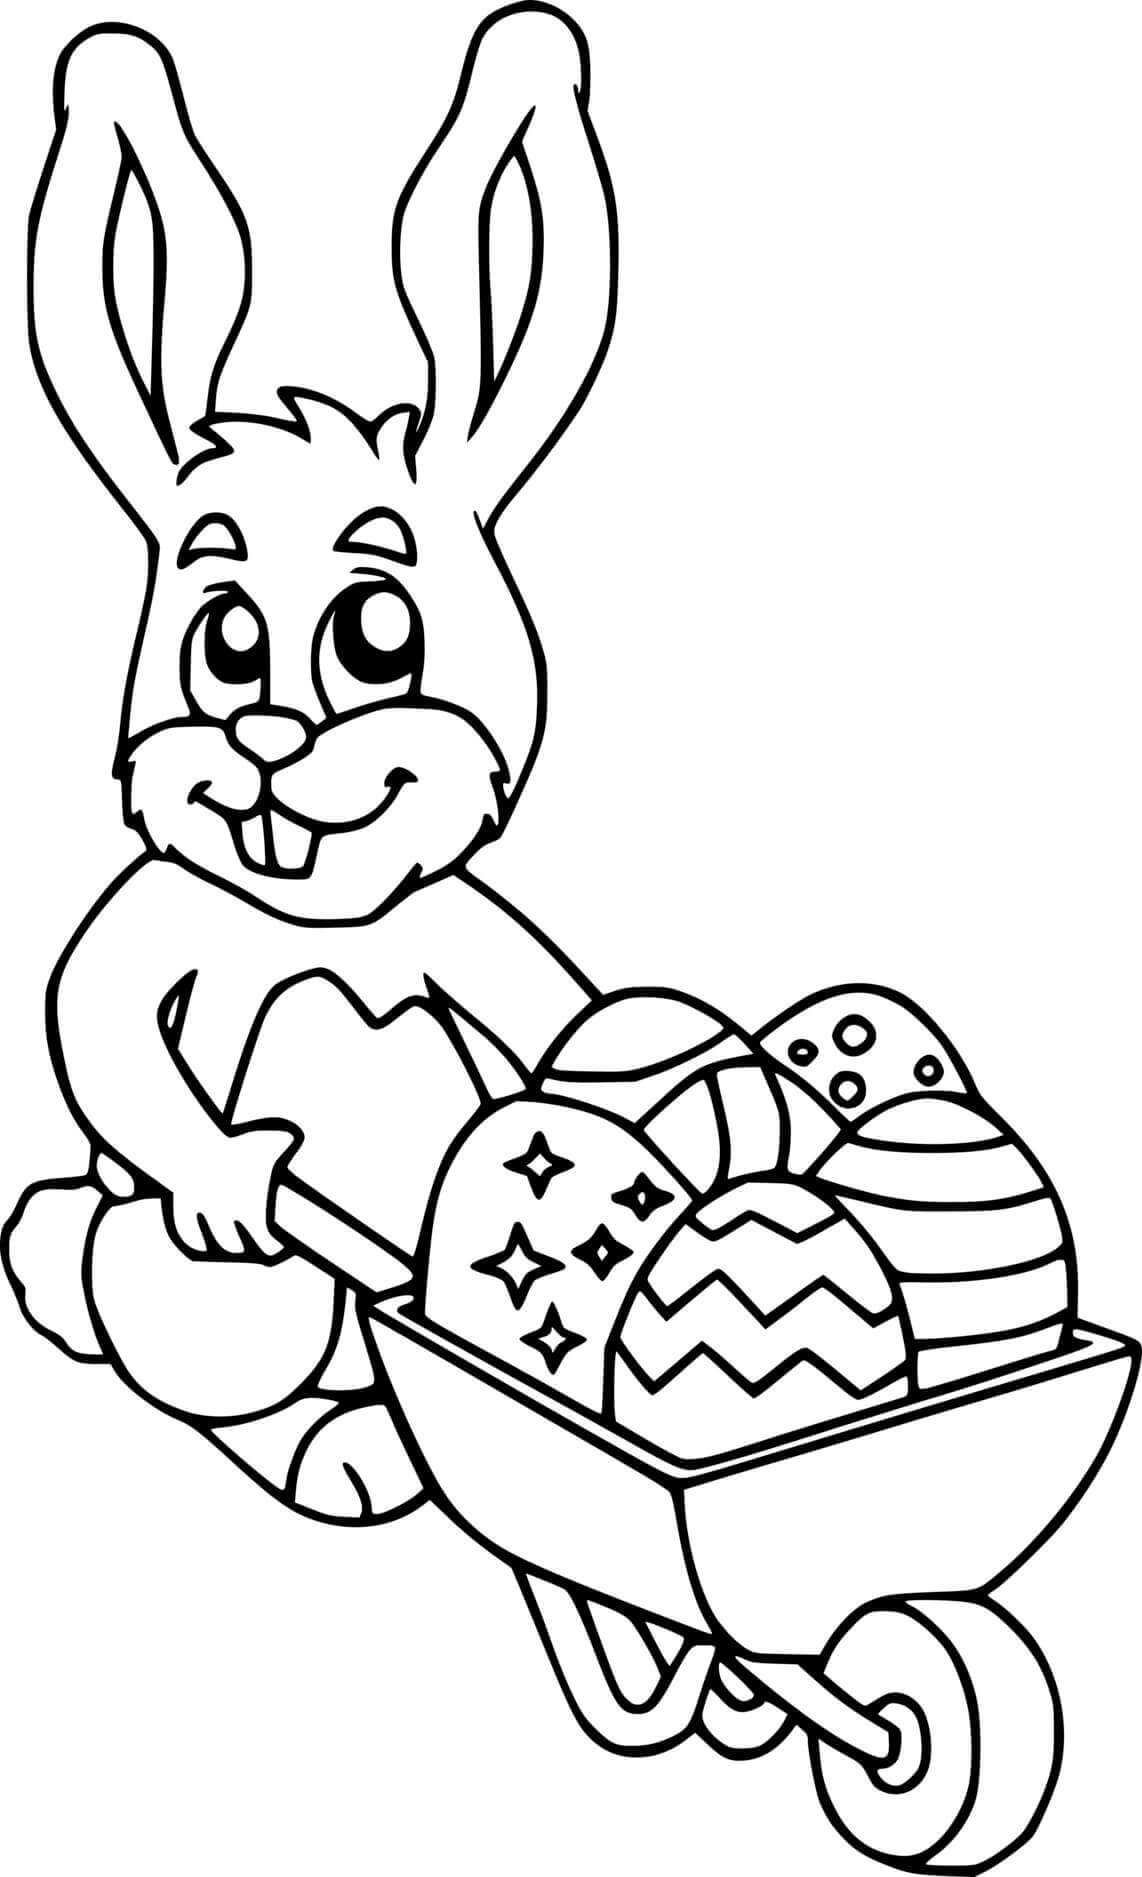 Easter Bunny Transports Eggs With A Wheelbarrow